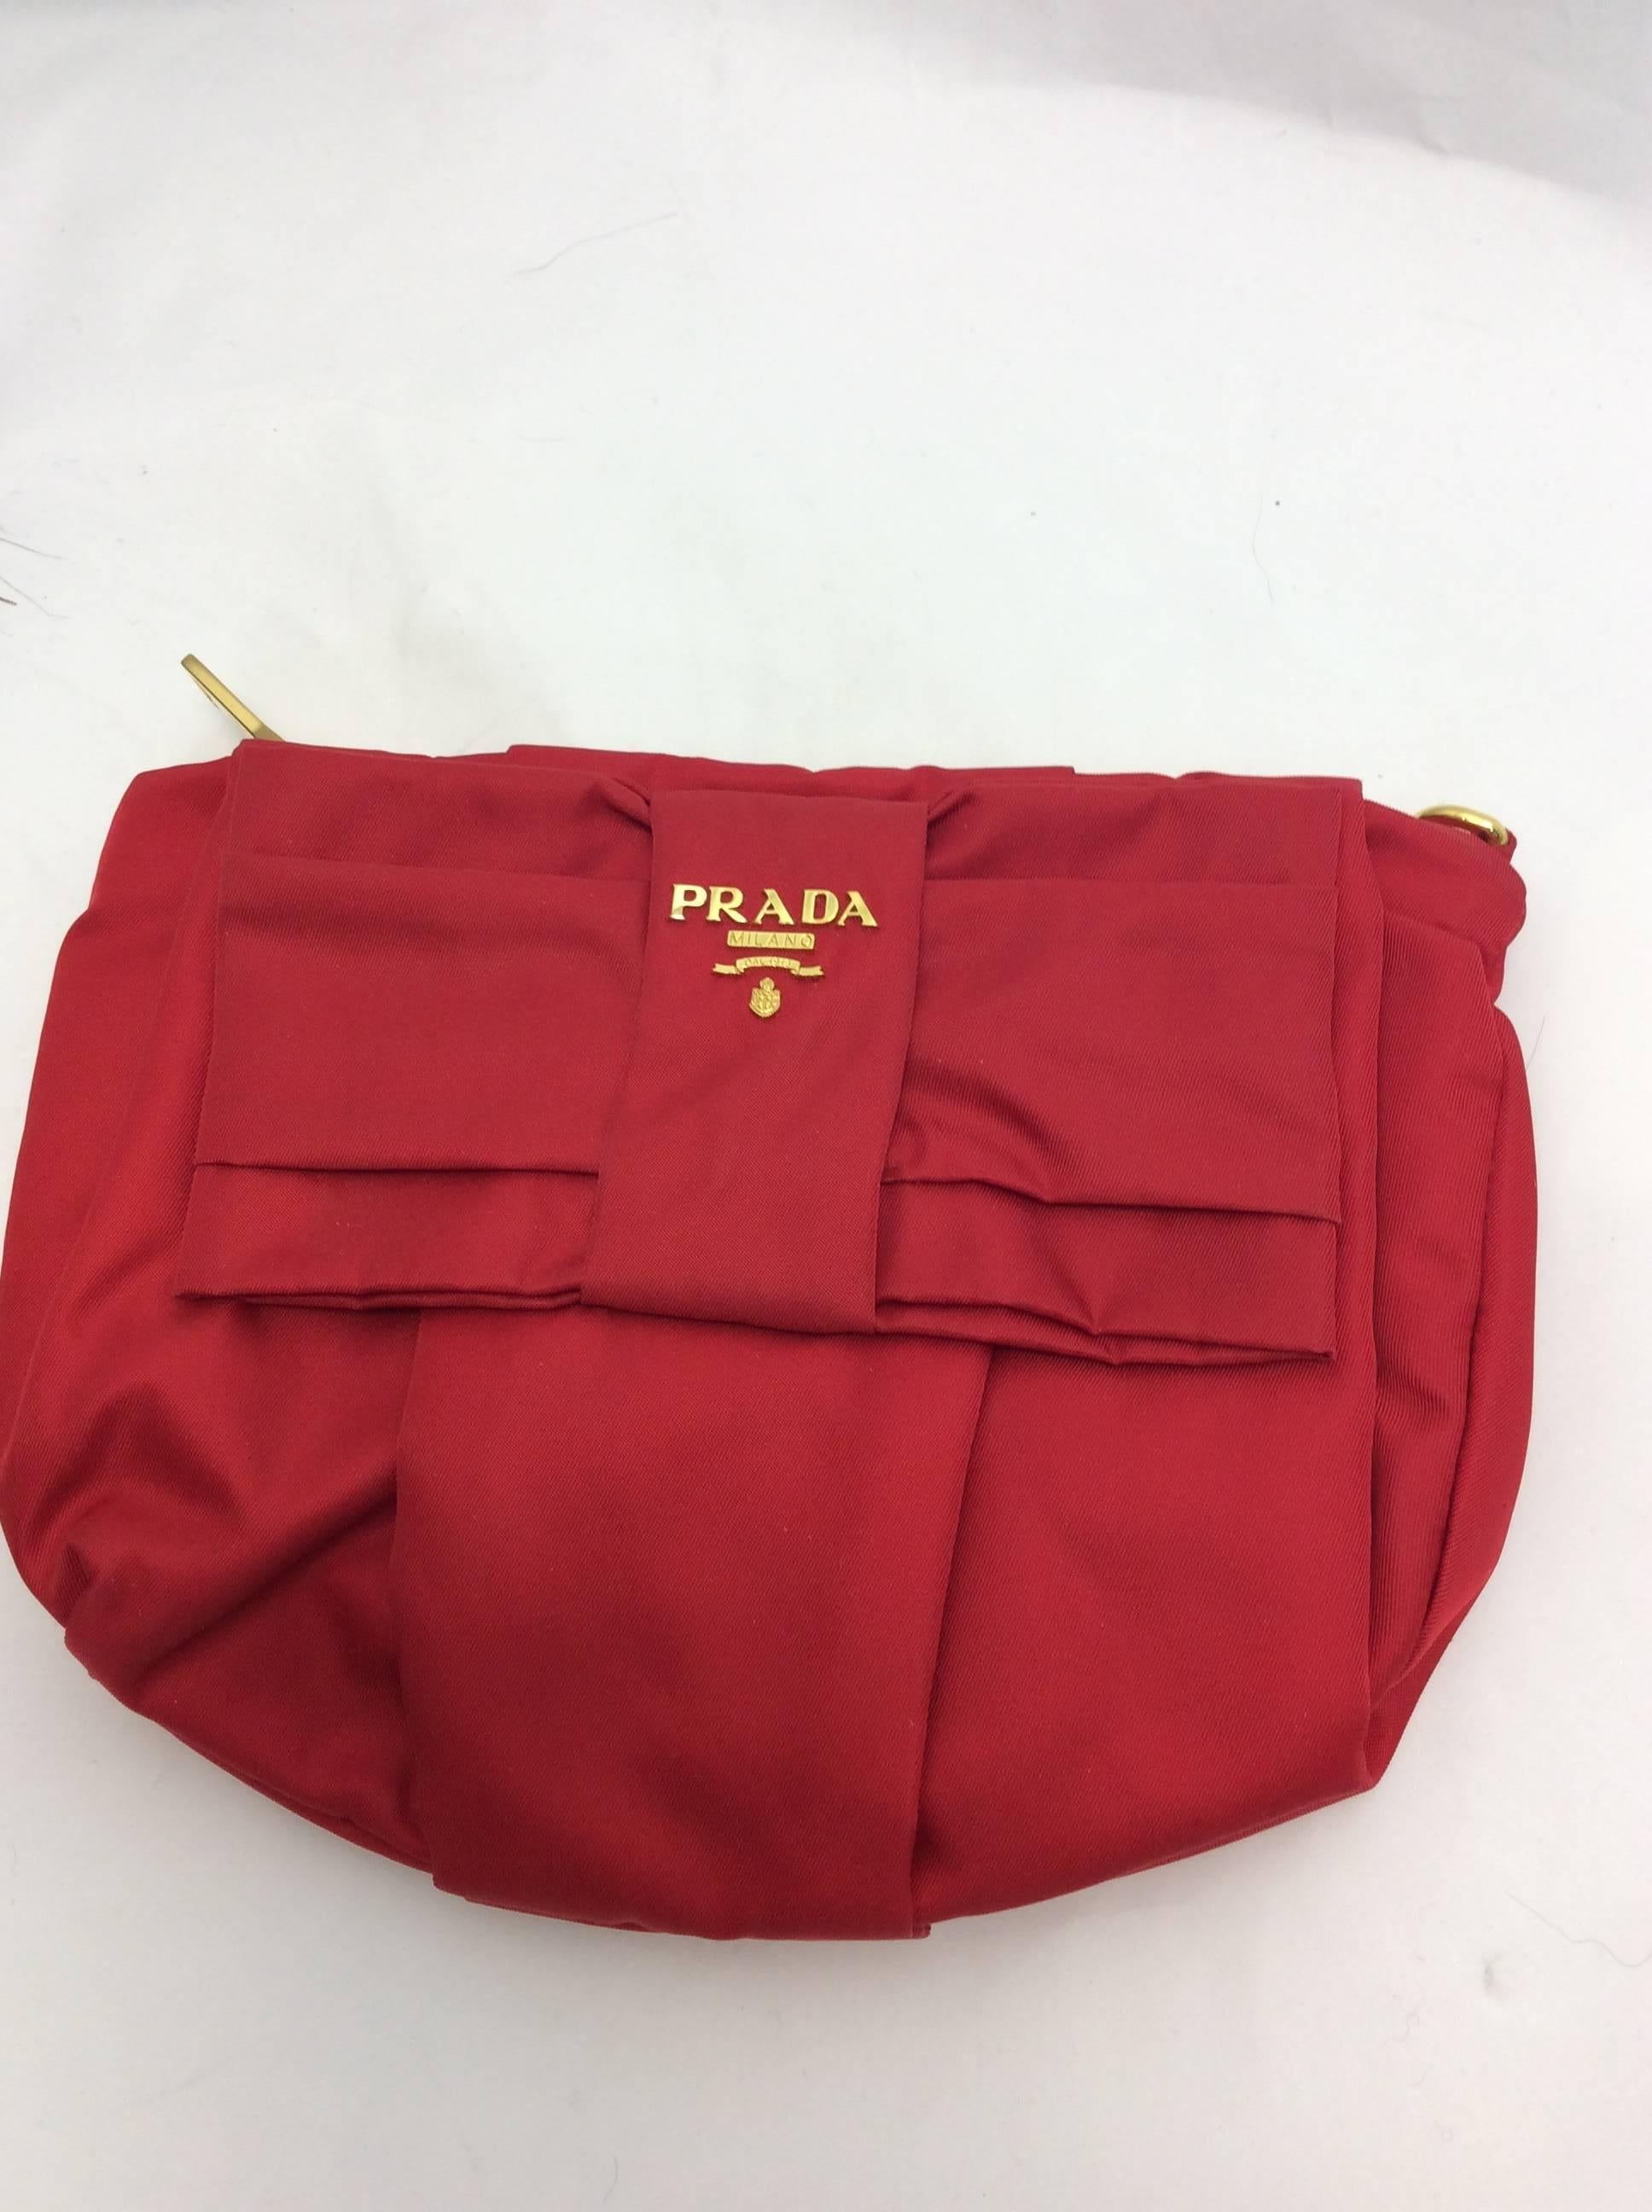 Prada Red Nylon Zipper Clutch
$150
Made in Italy
Gold toned hardware
